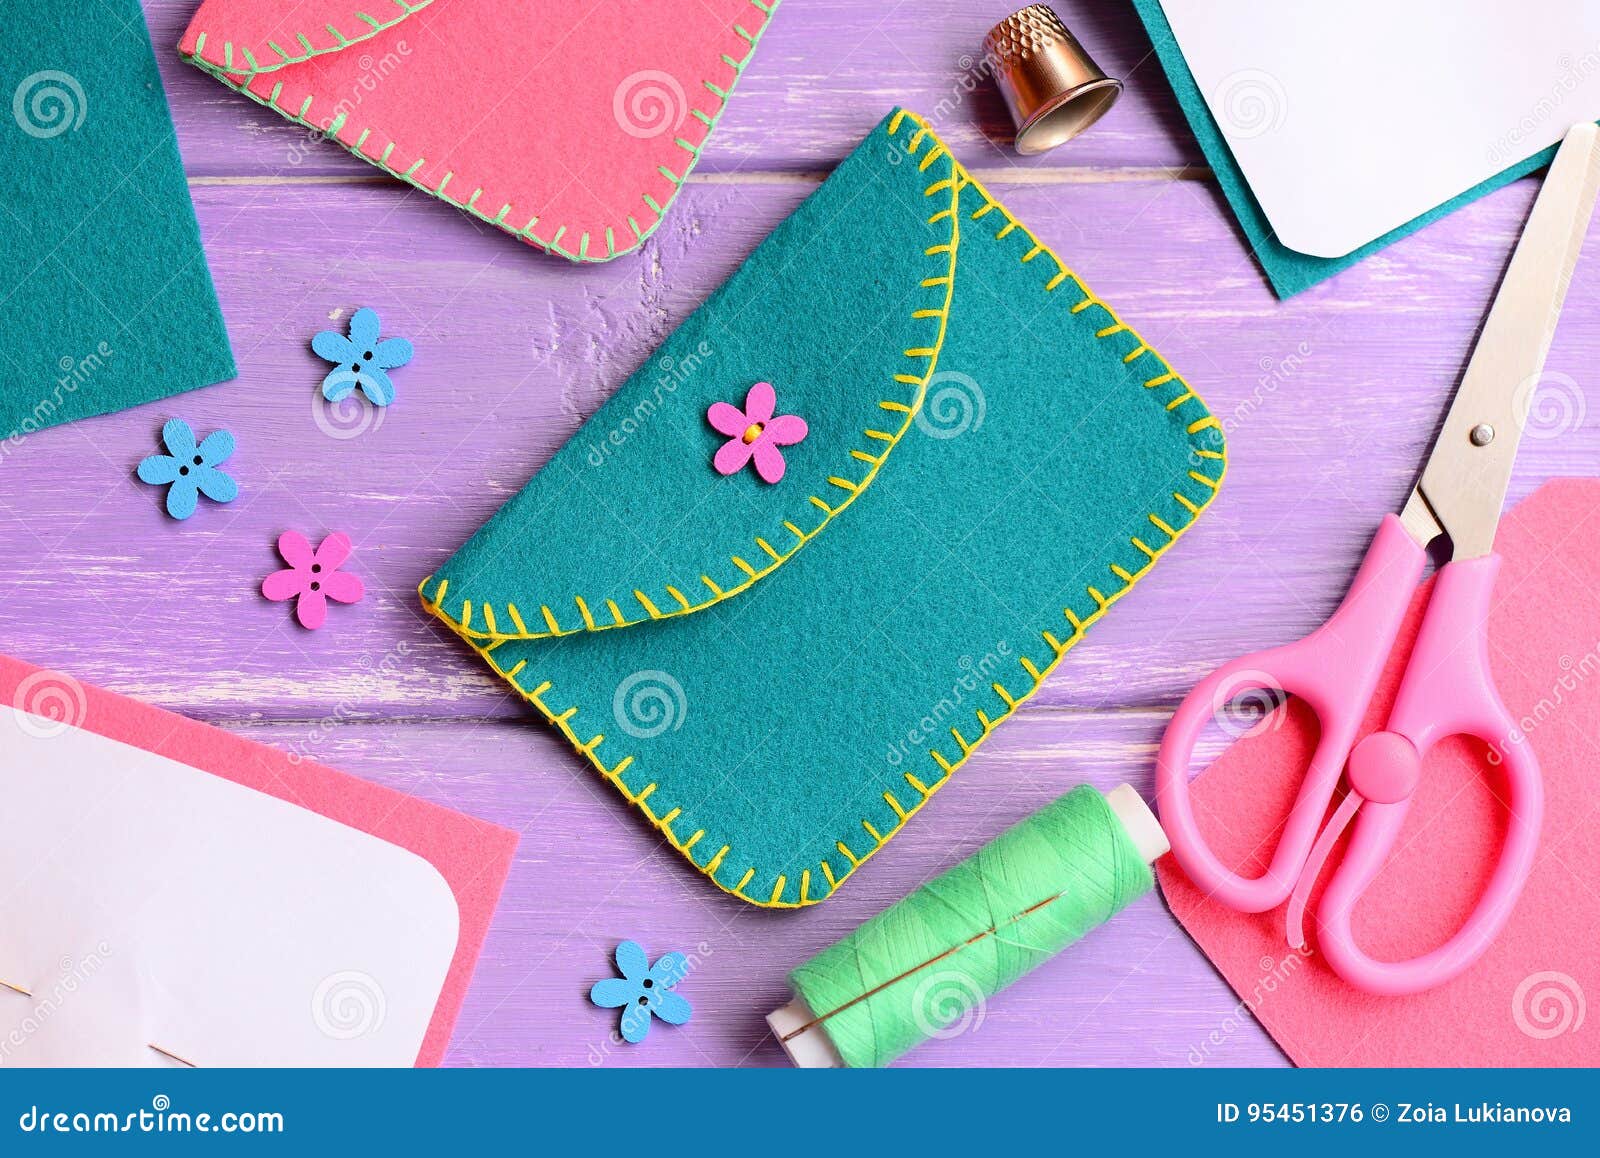 Amazon.com: Wang shufang 1set DIY Leather Handmade Craft Women Handbag  Wallet Purse Sewing Pattern Hard Kraft Paper Stencil Template 220x120x25mm  : Clothing, Shoes & Jewelry